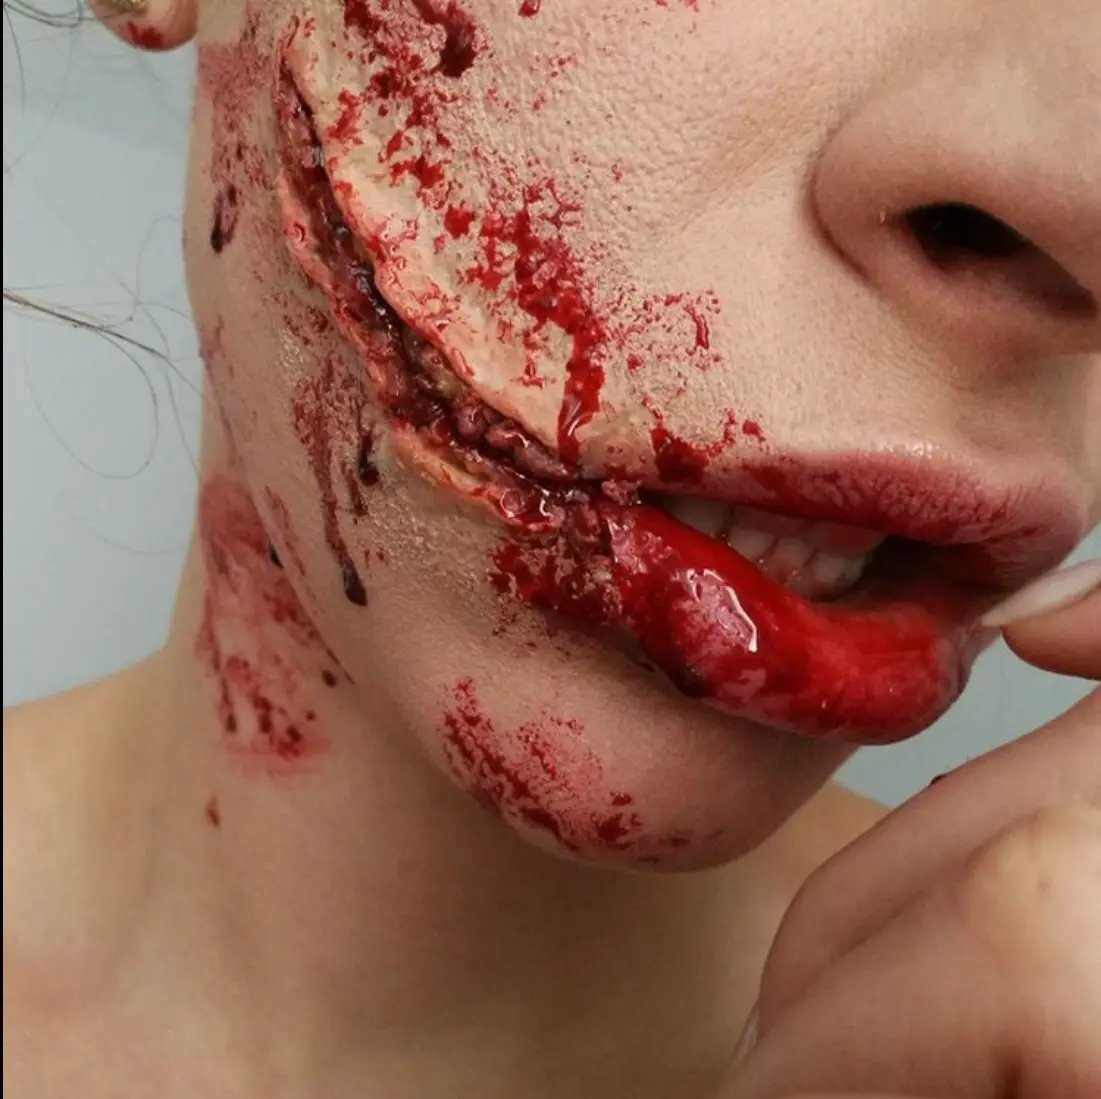 fake wound makeup